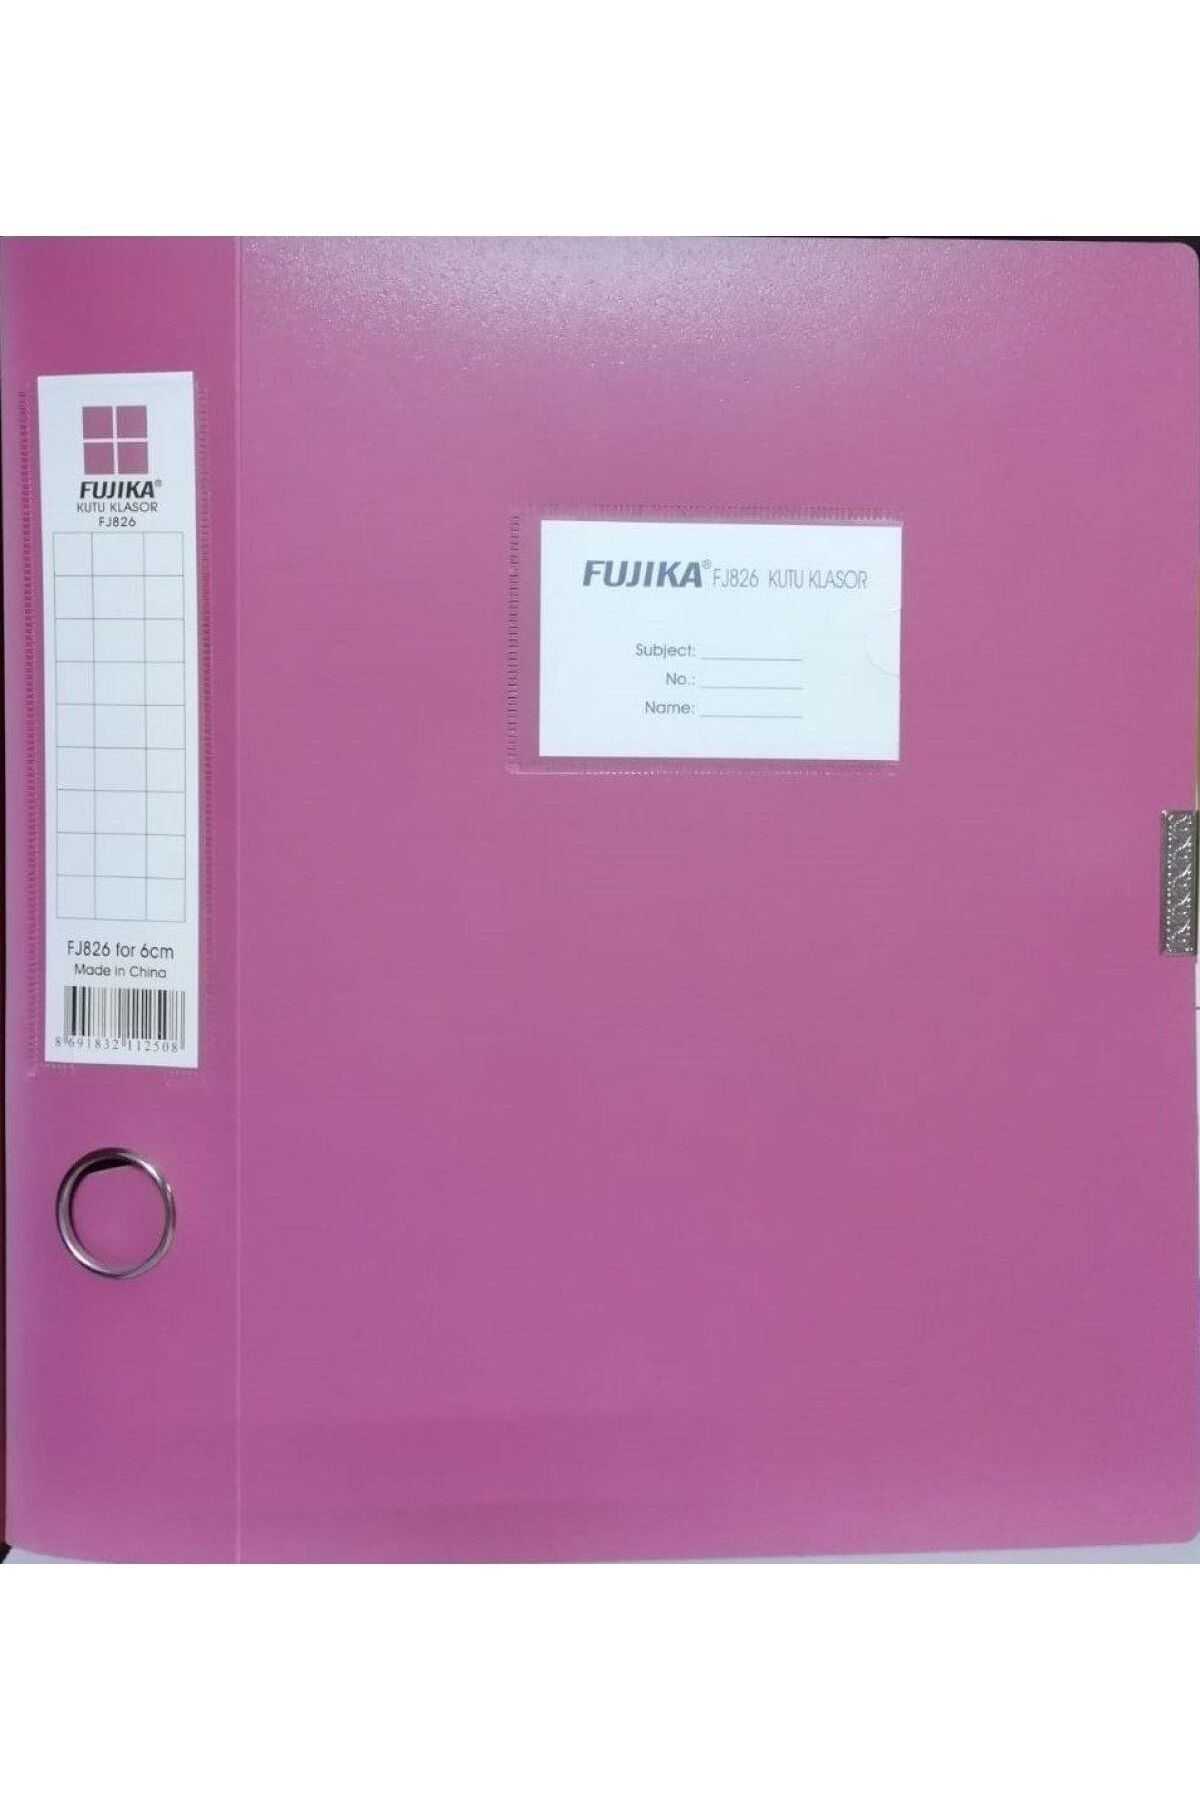 Fujika KUTU DOSYA 6cm GENİŞLİK FJ826 PEMBE ( 5 ADET )